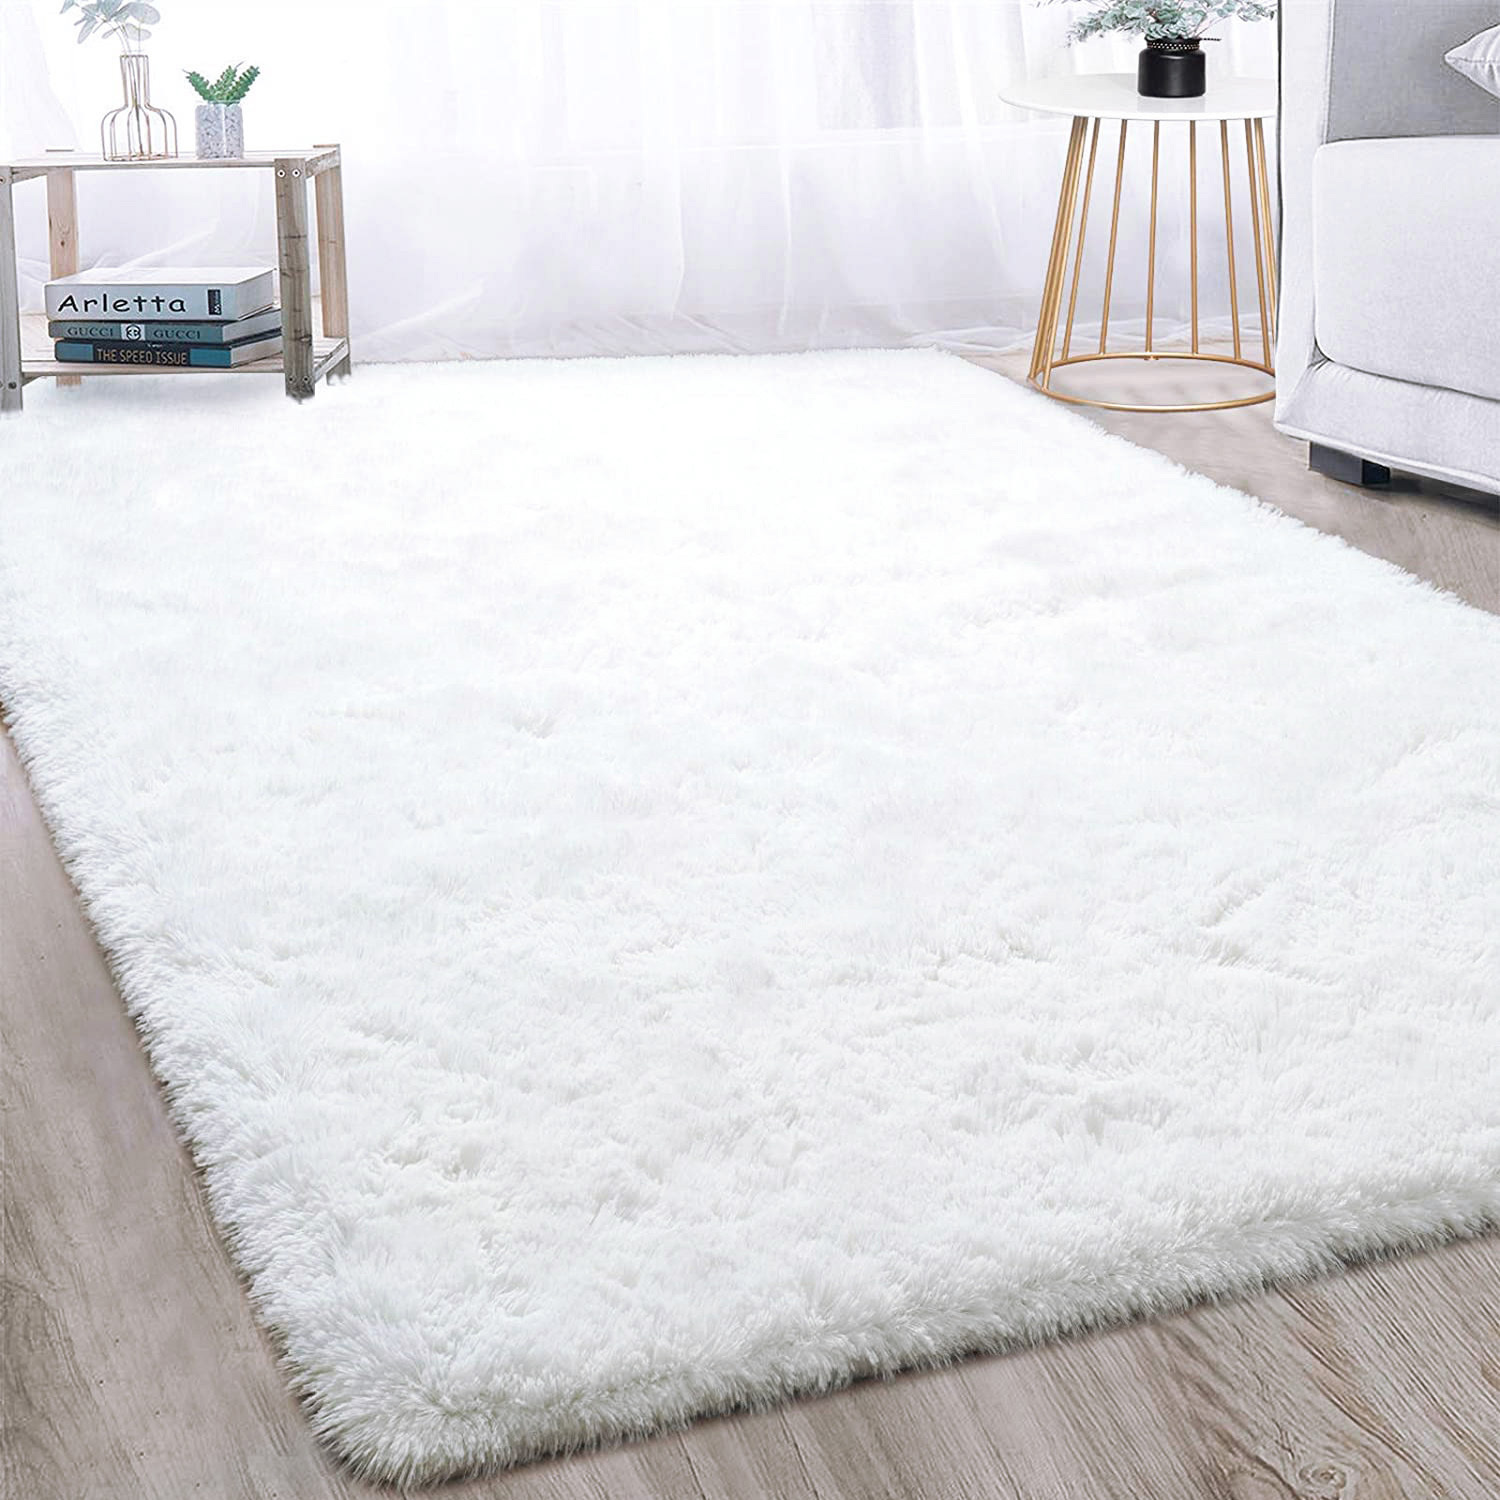 XL Extra Large Soft Shag Rug Carpet Mat (White, 300 x 200)